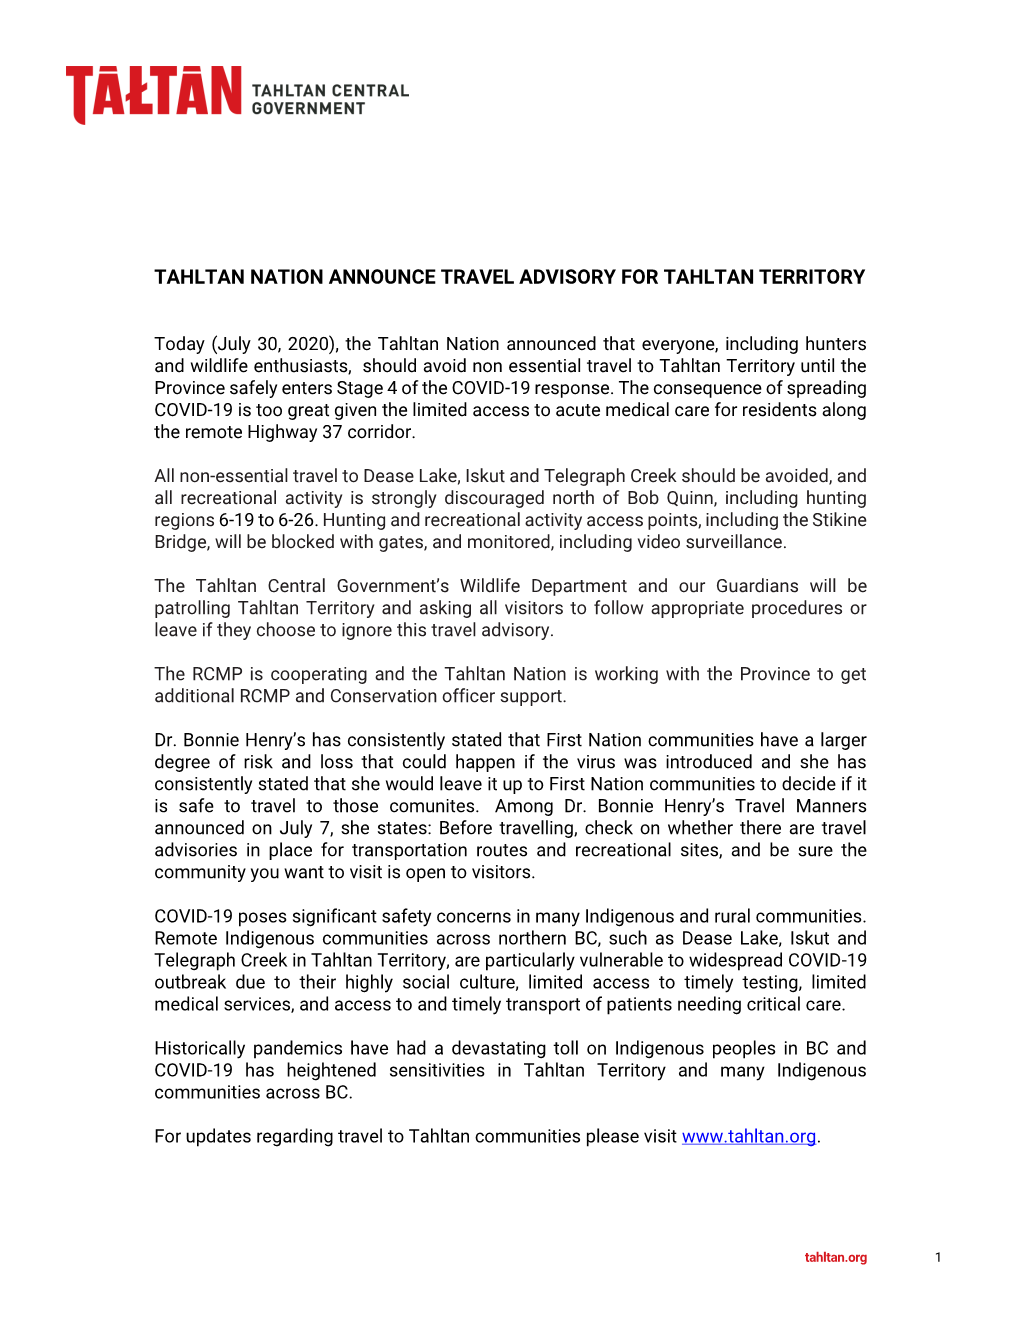 Tahltan Nation Announce Travel Advisory for Tahltan Territory